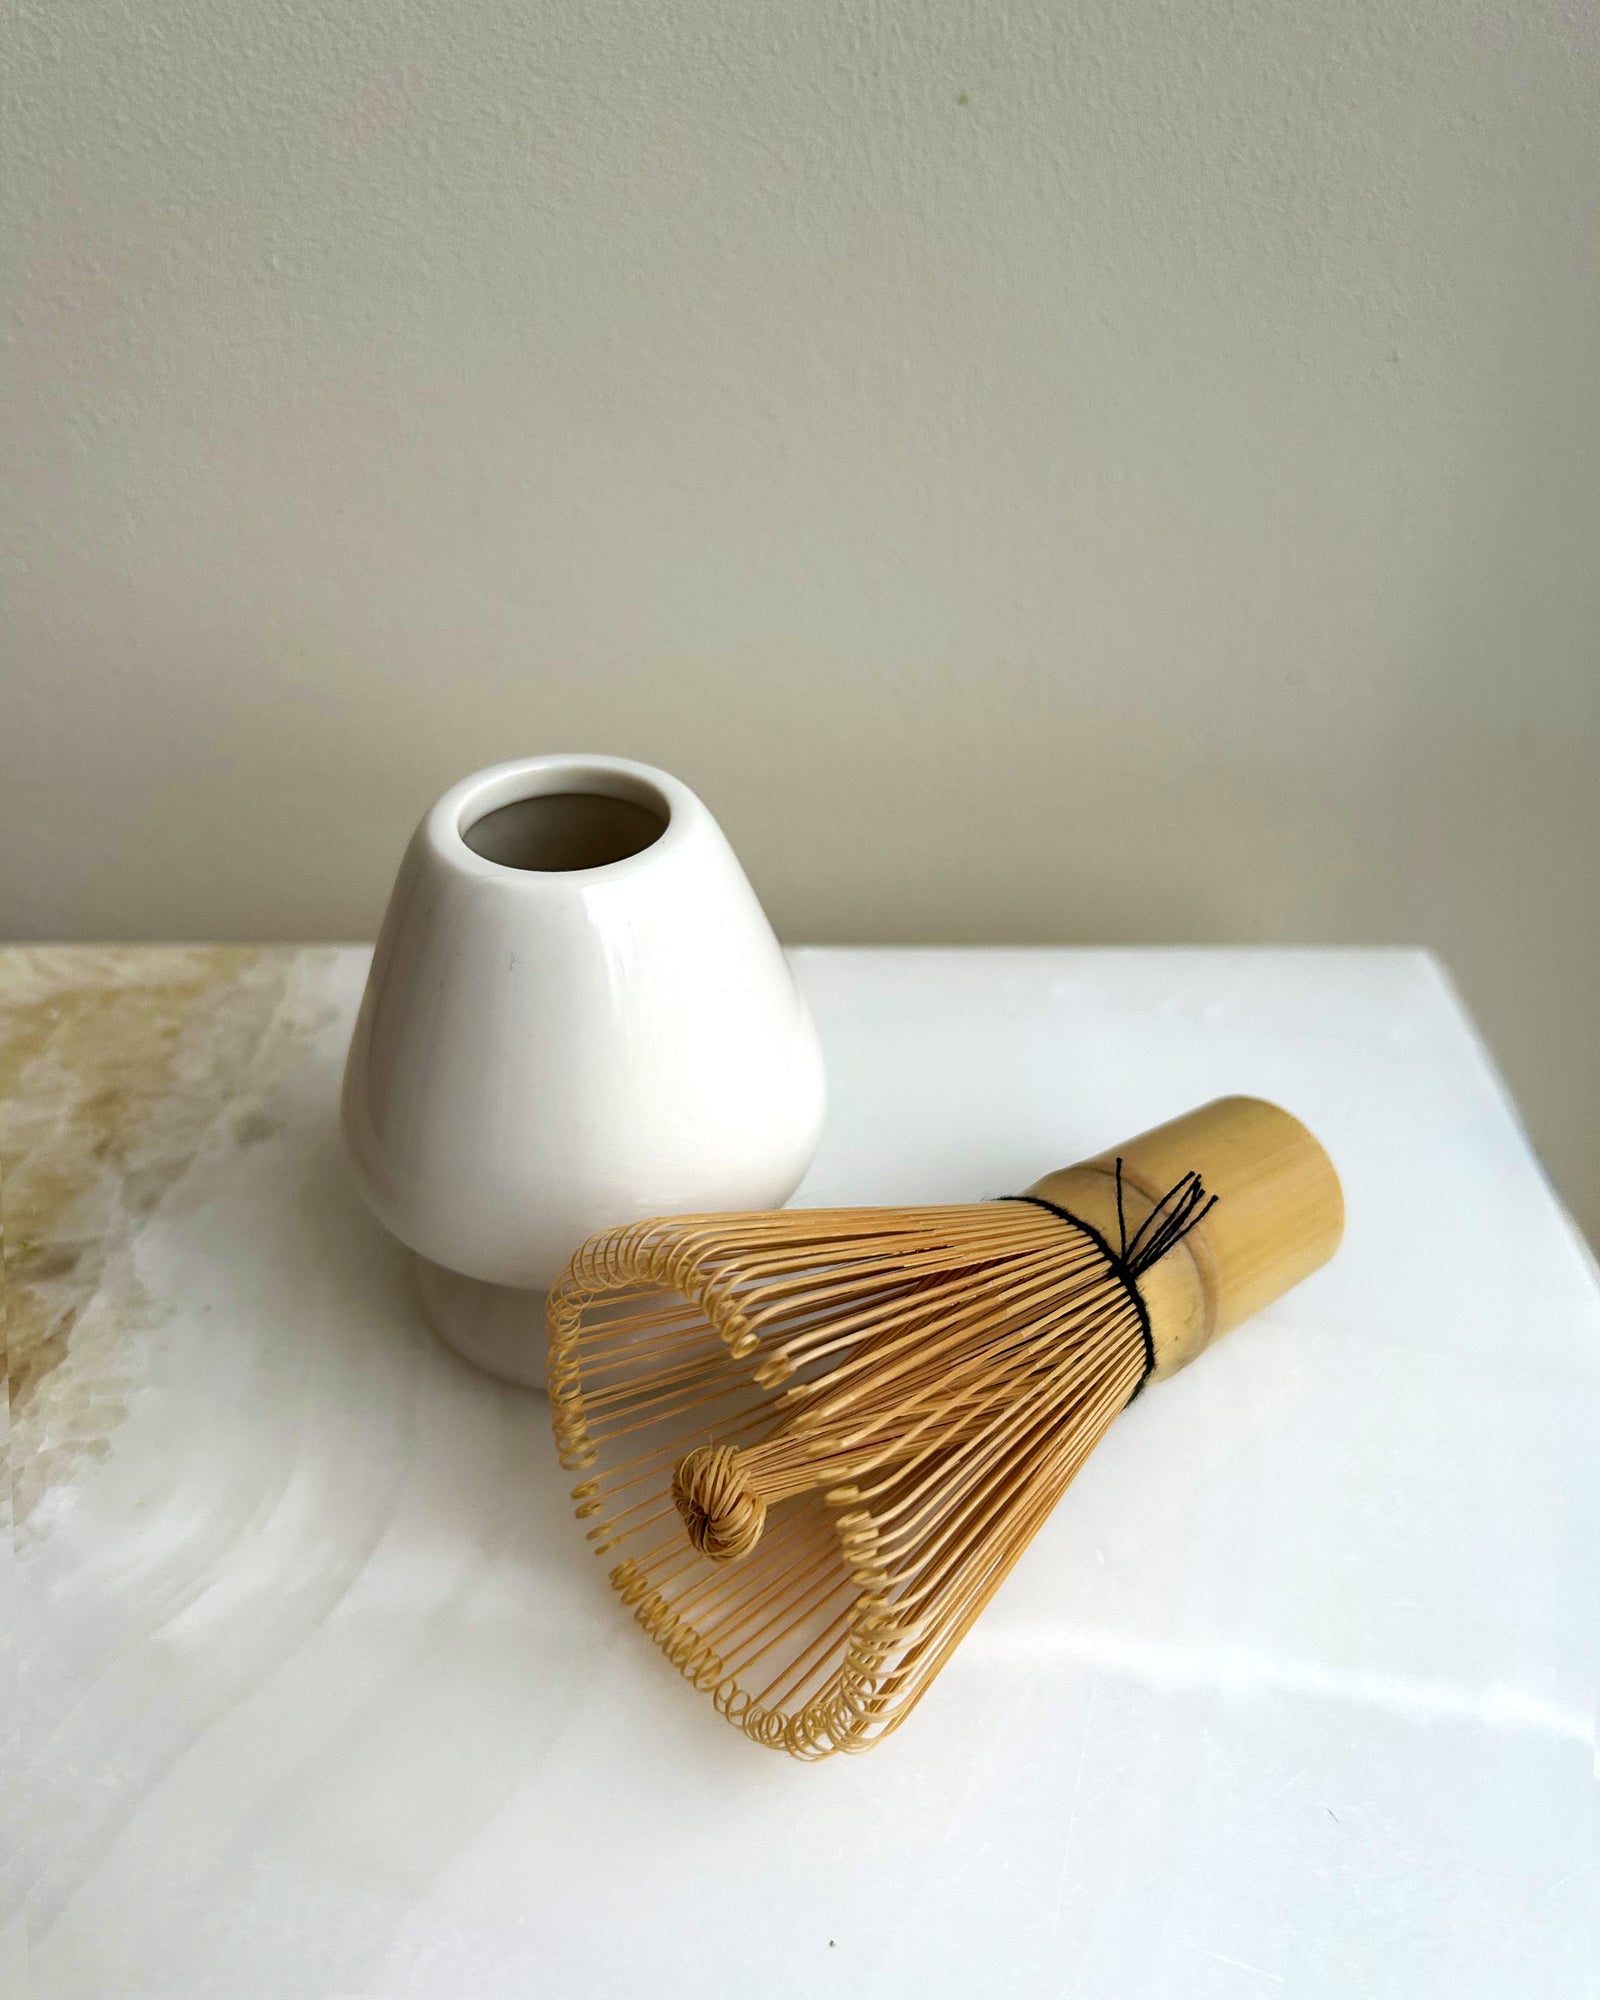 MATCHA TEA Set, Ceramic Bowl and Bamboo Whisk 💚